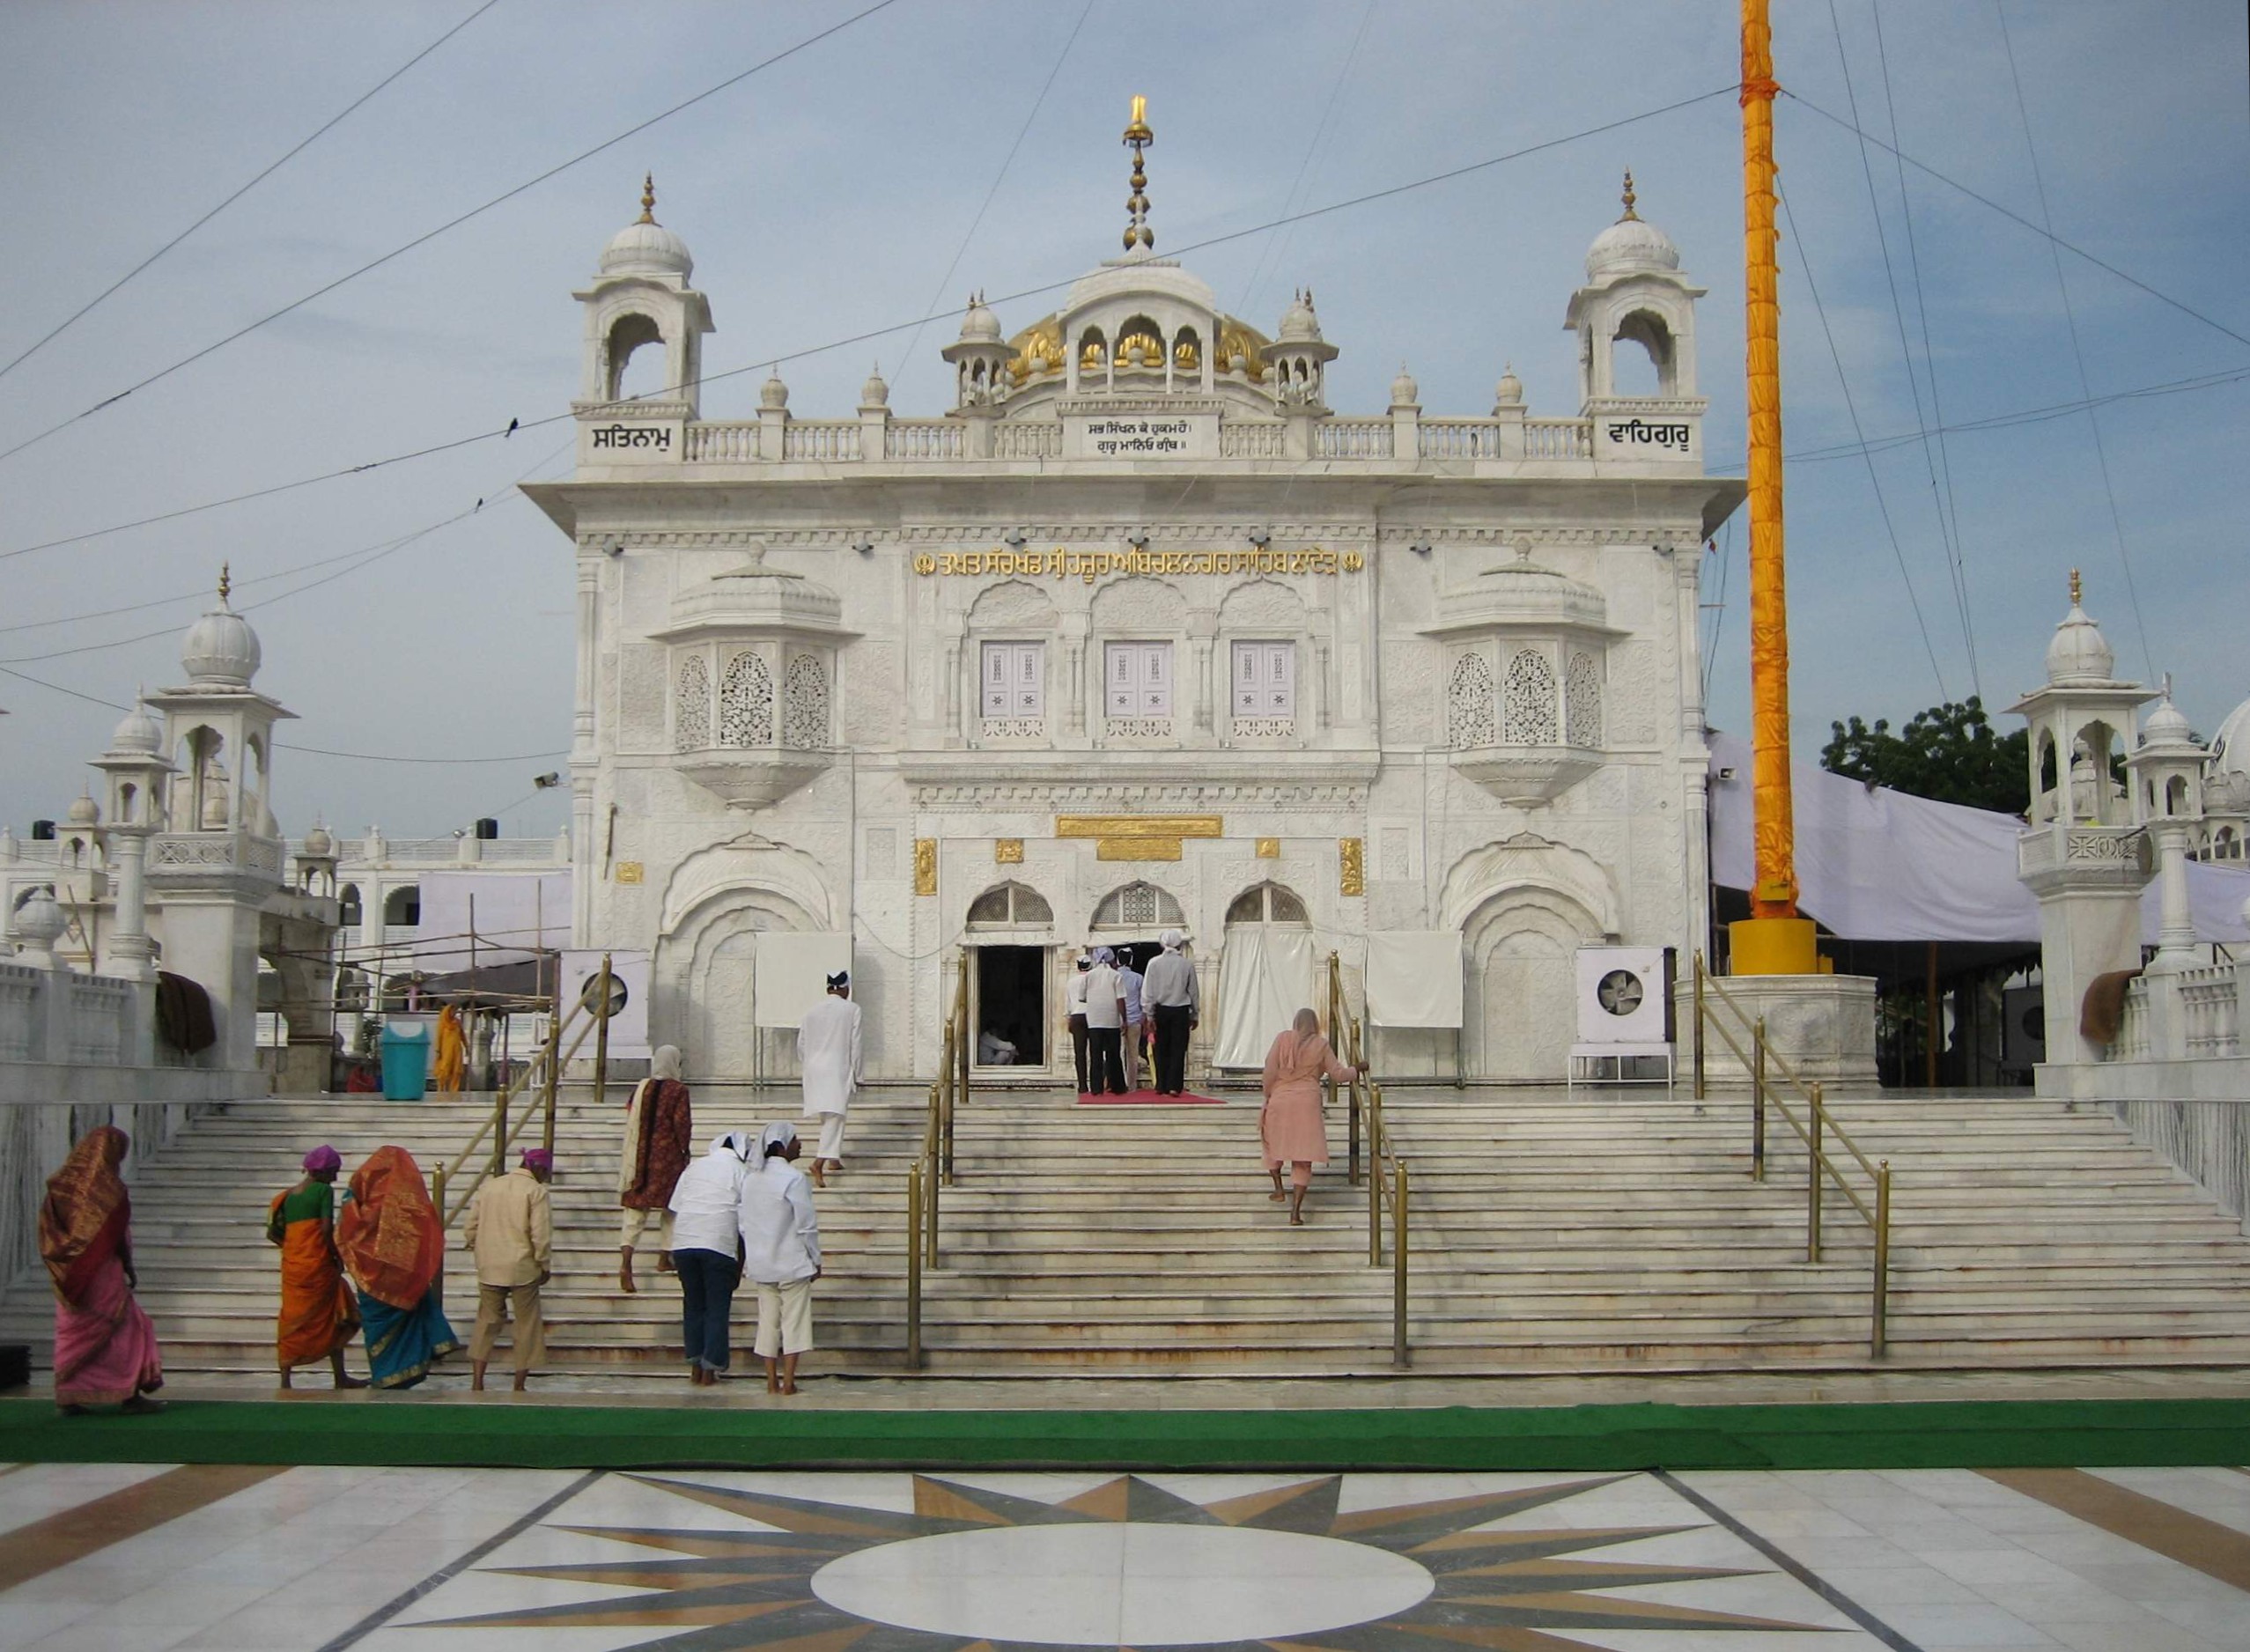 Gurdwara Sri Hazoor Sahib, Nanded